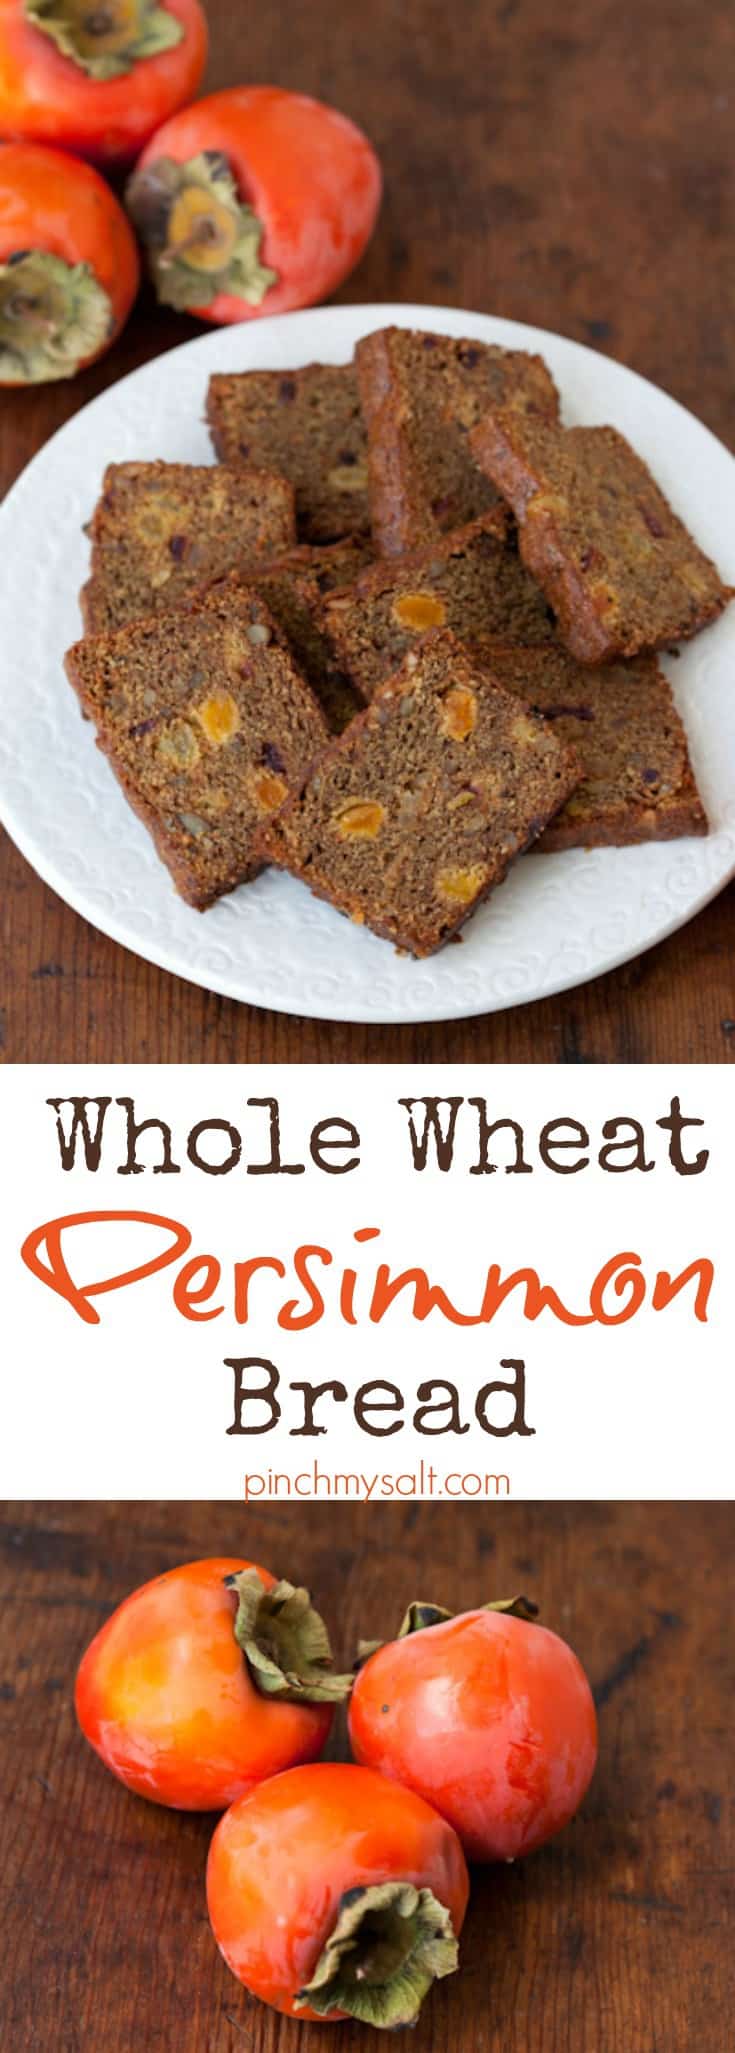 Whole Wheat Persimmon Bread Recipe | pinchmysalt.com